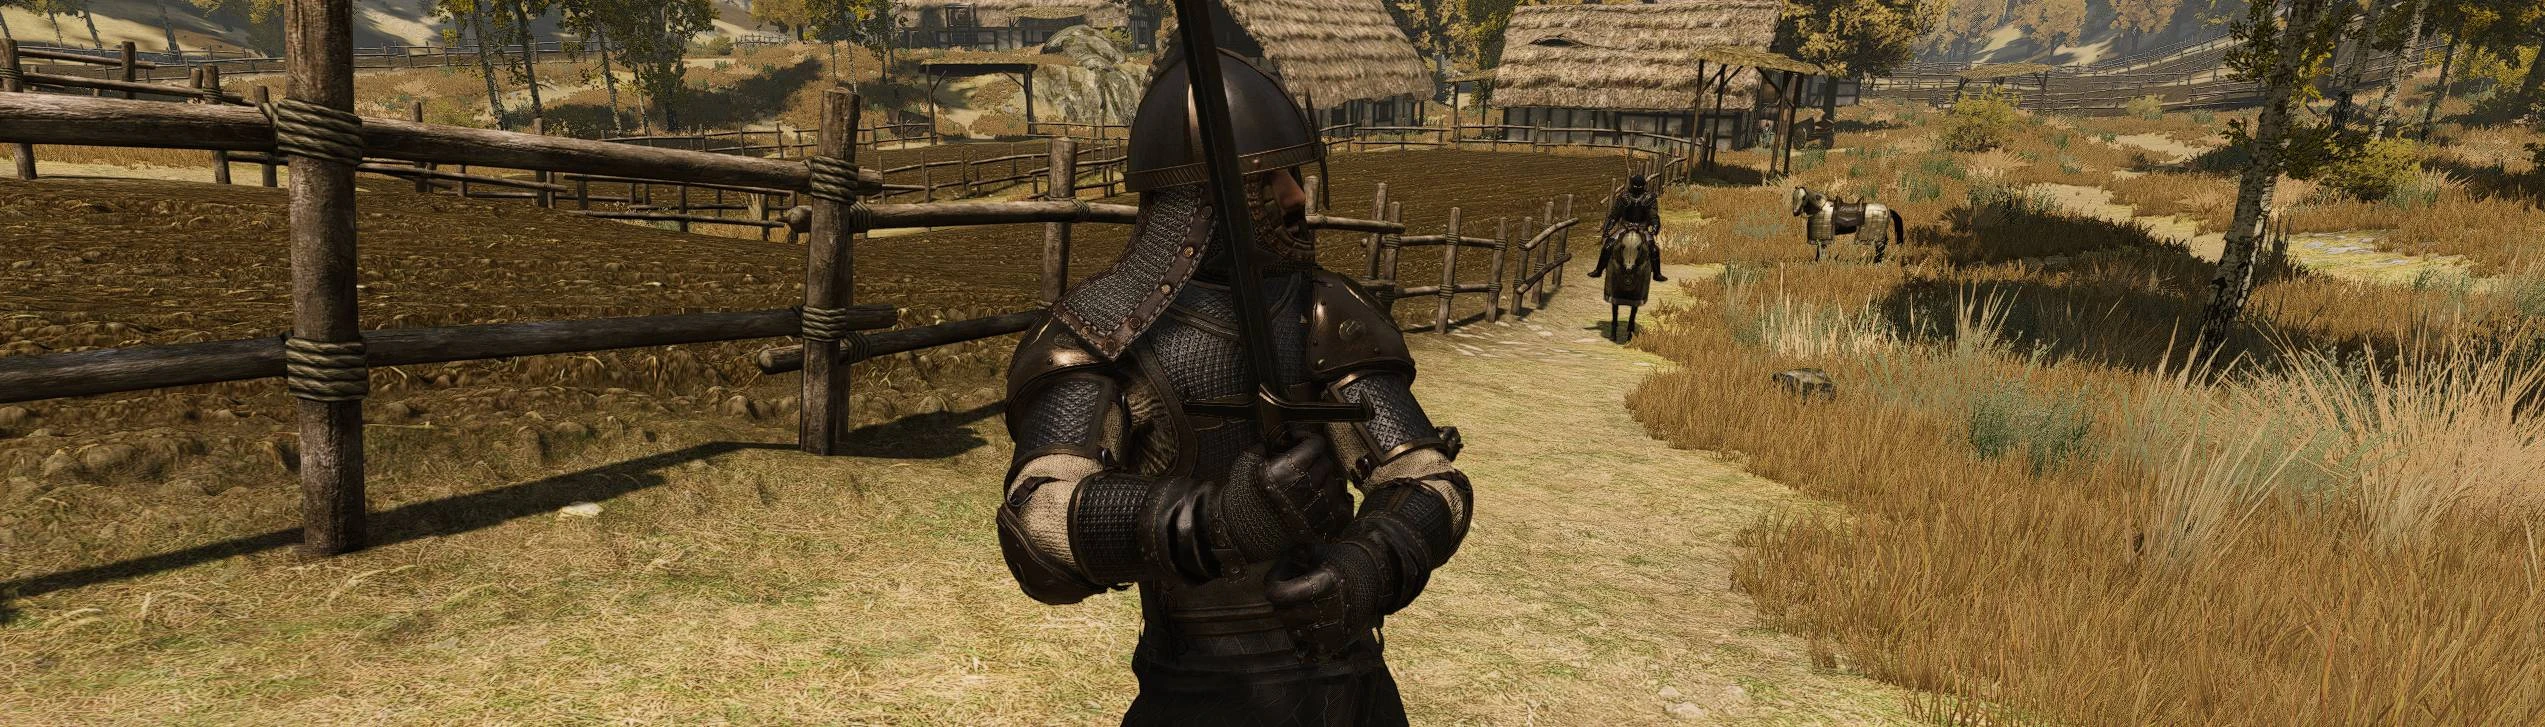 ArtStation - GOT Jorah Mormont armor and weapons